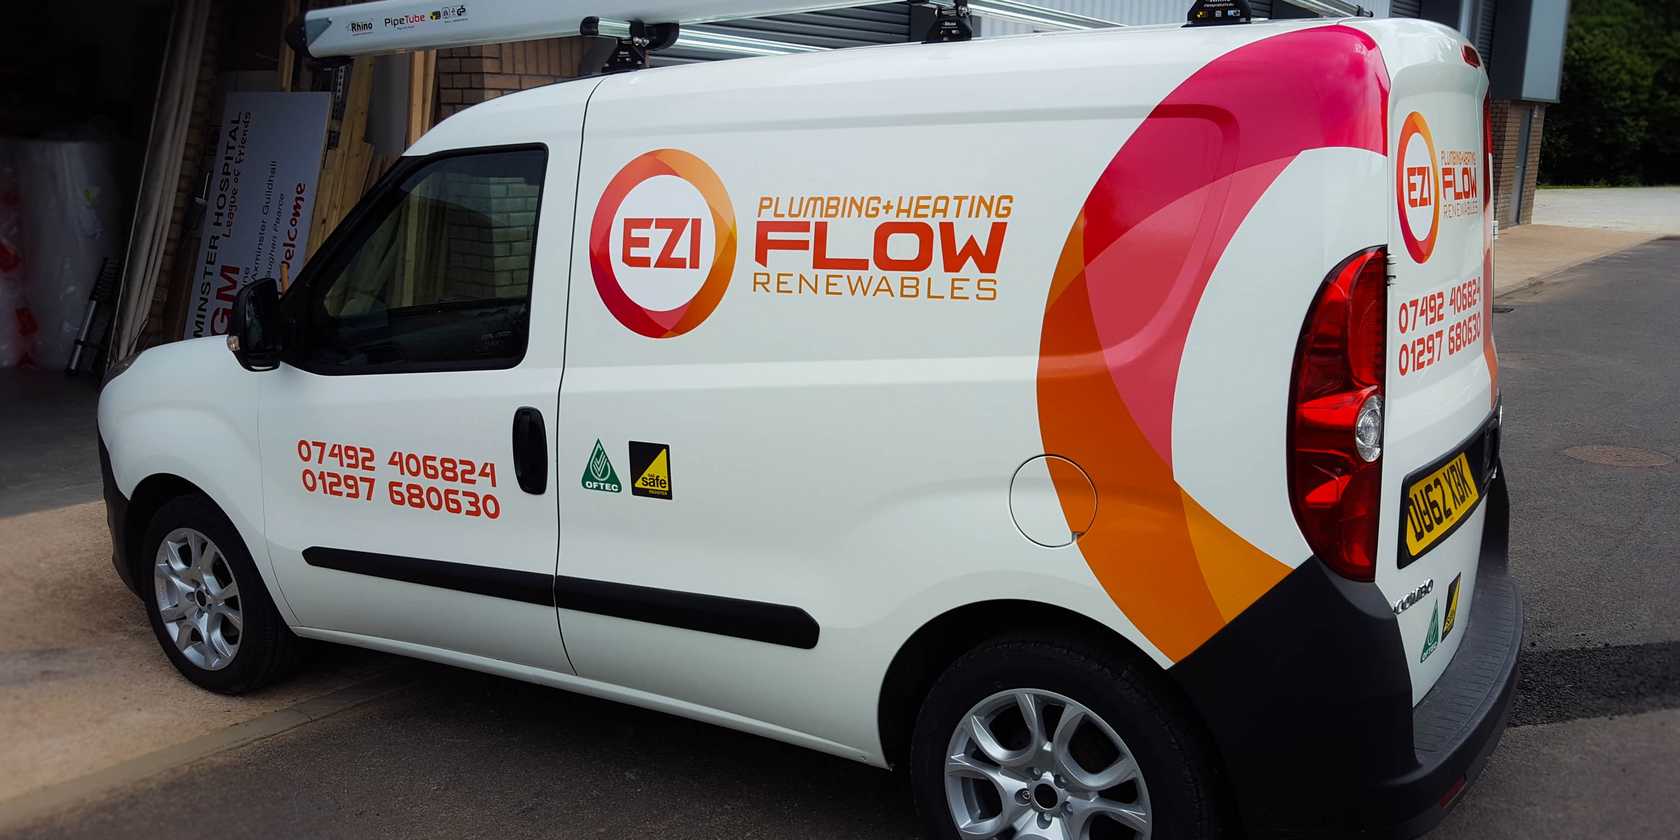 Vehicle Graphics for Ezi Flow Plumbing and Heating Renewables